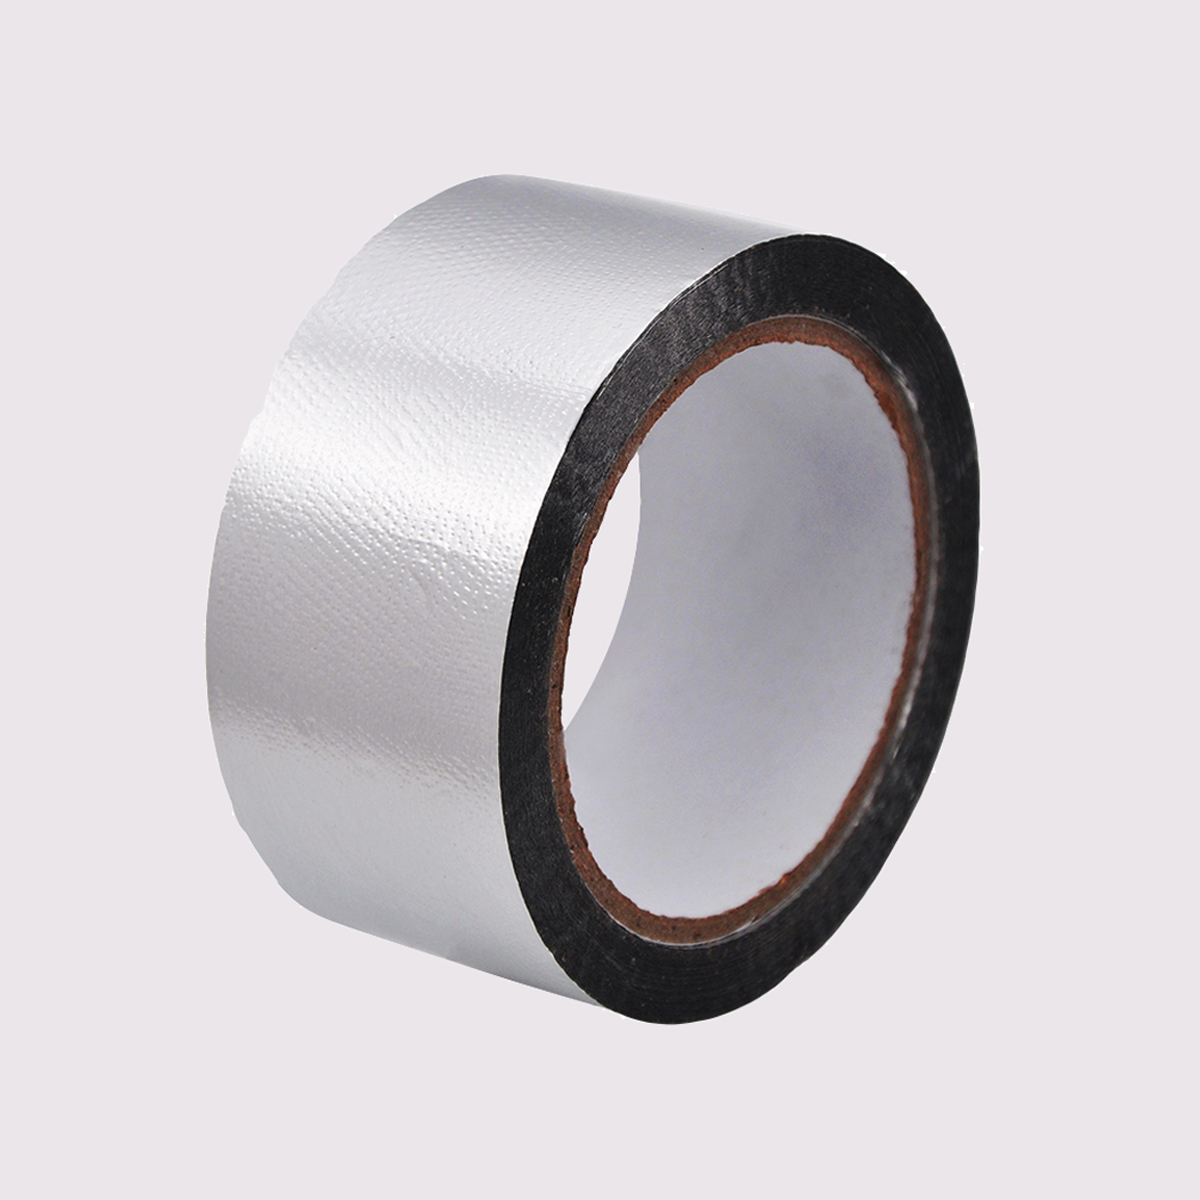 Factory bopp pet film coated aluminum foil tape Featured Image